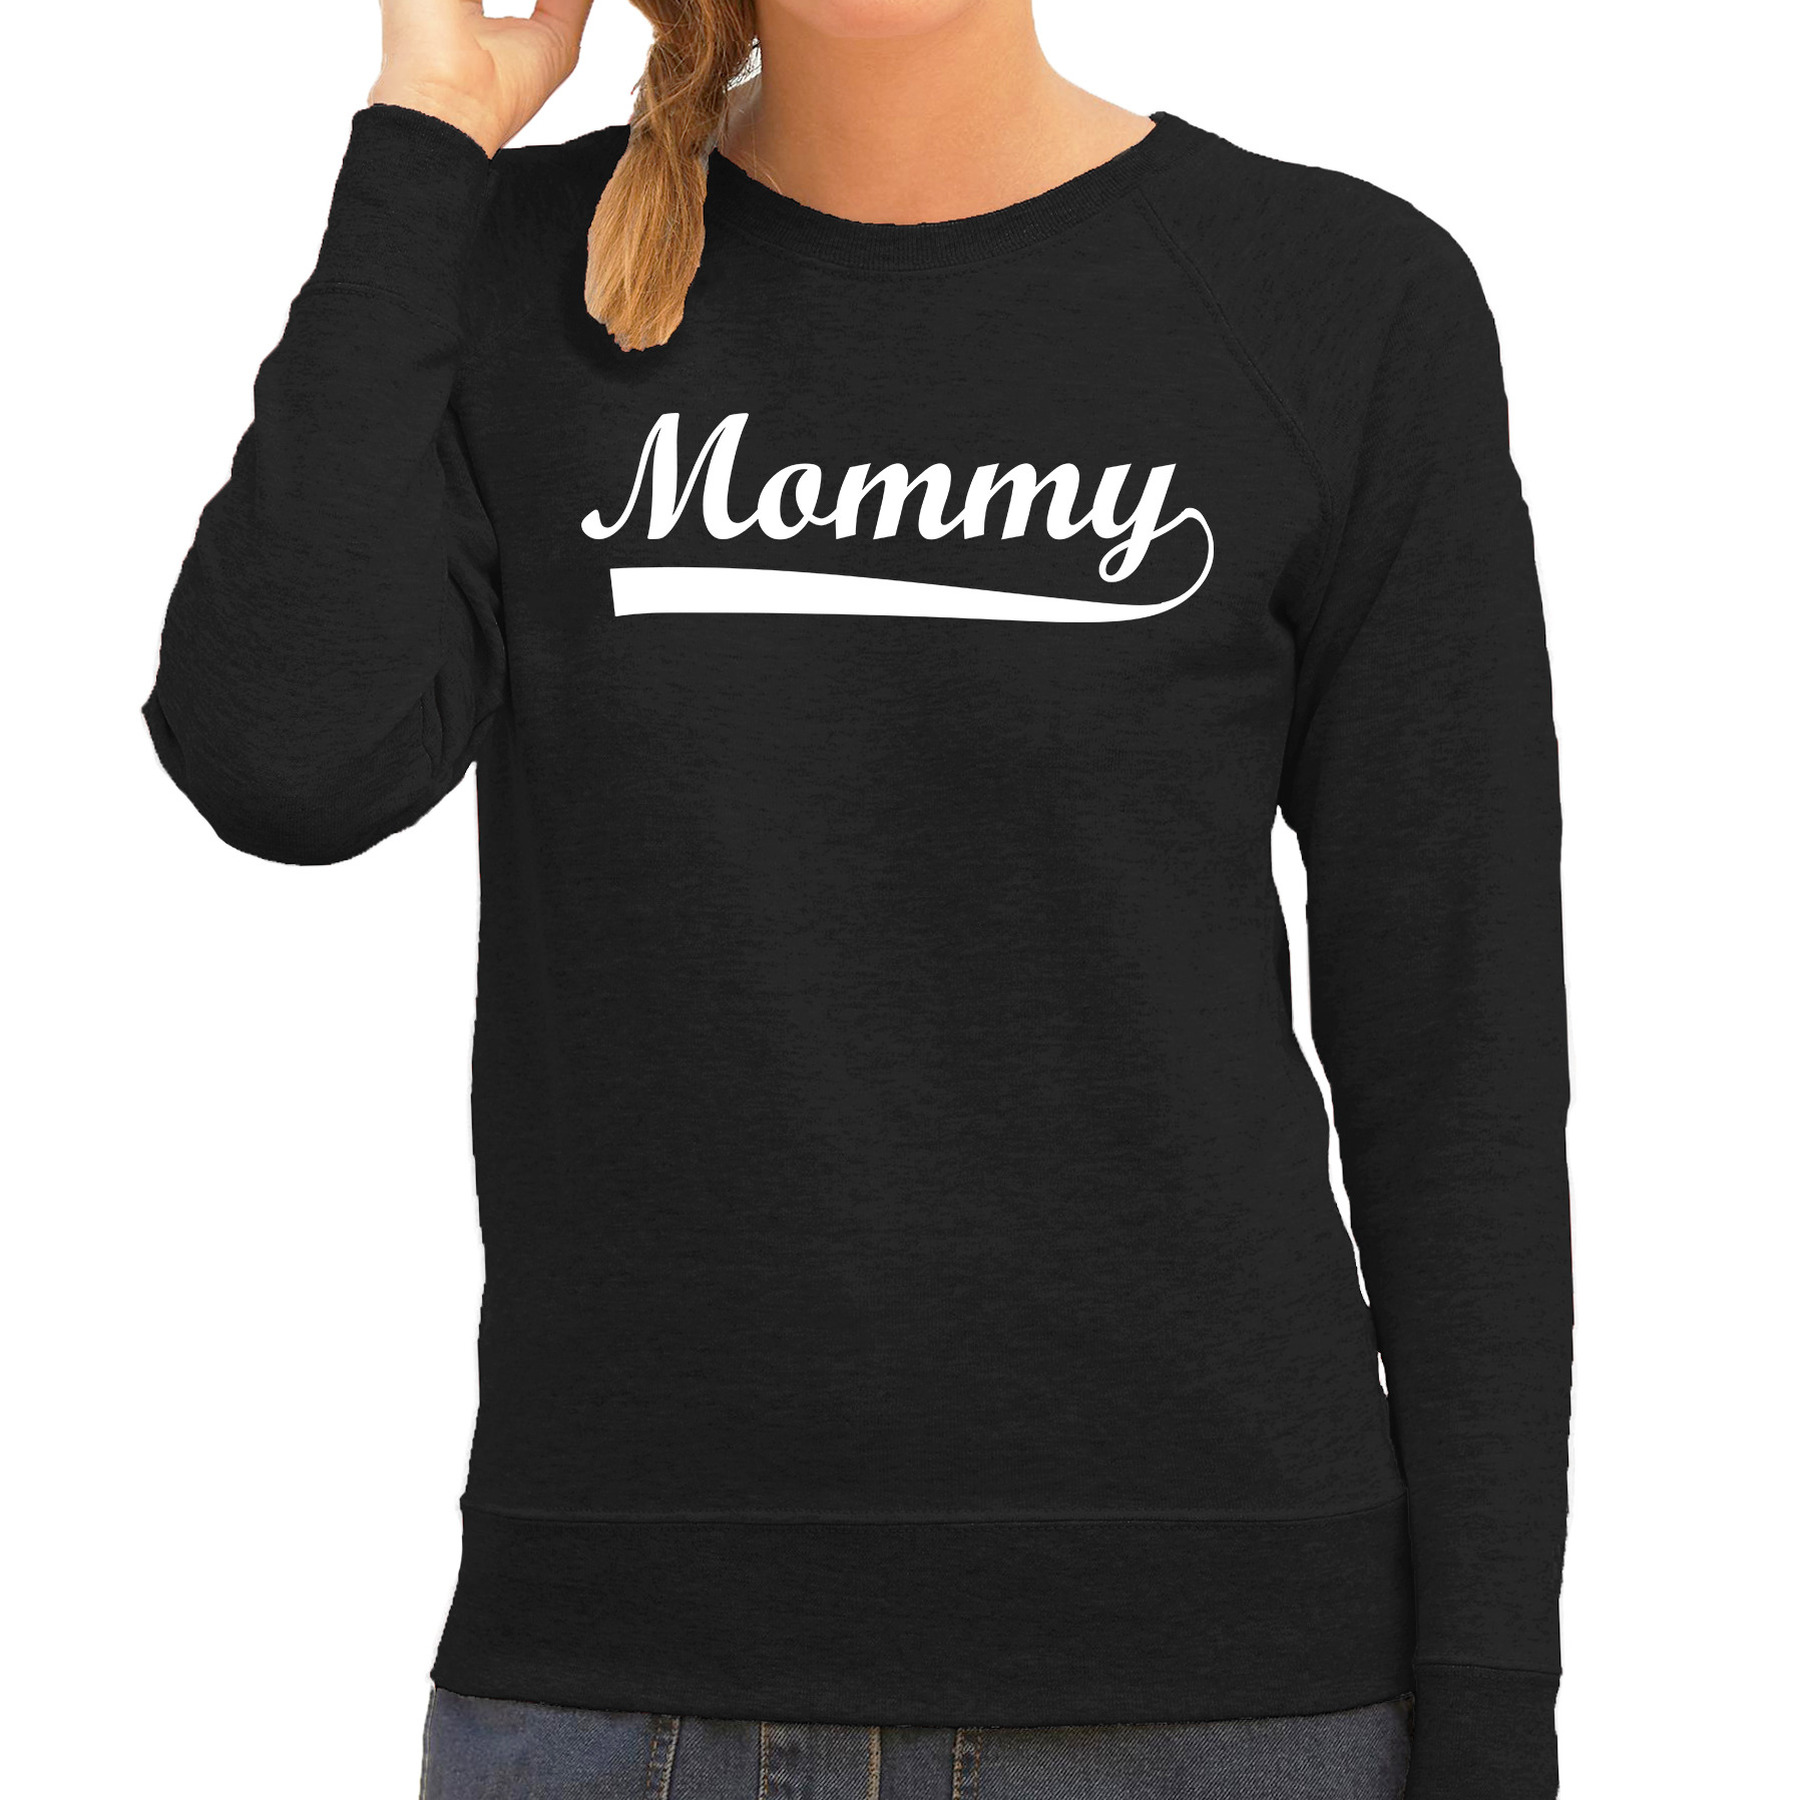 Mommy sweater / trui zwart voor dames - moederdag cadeau truien mama